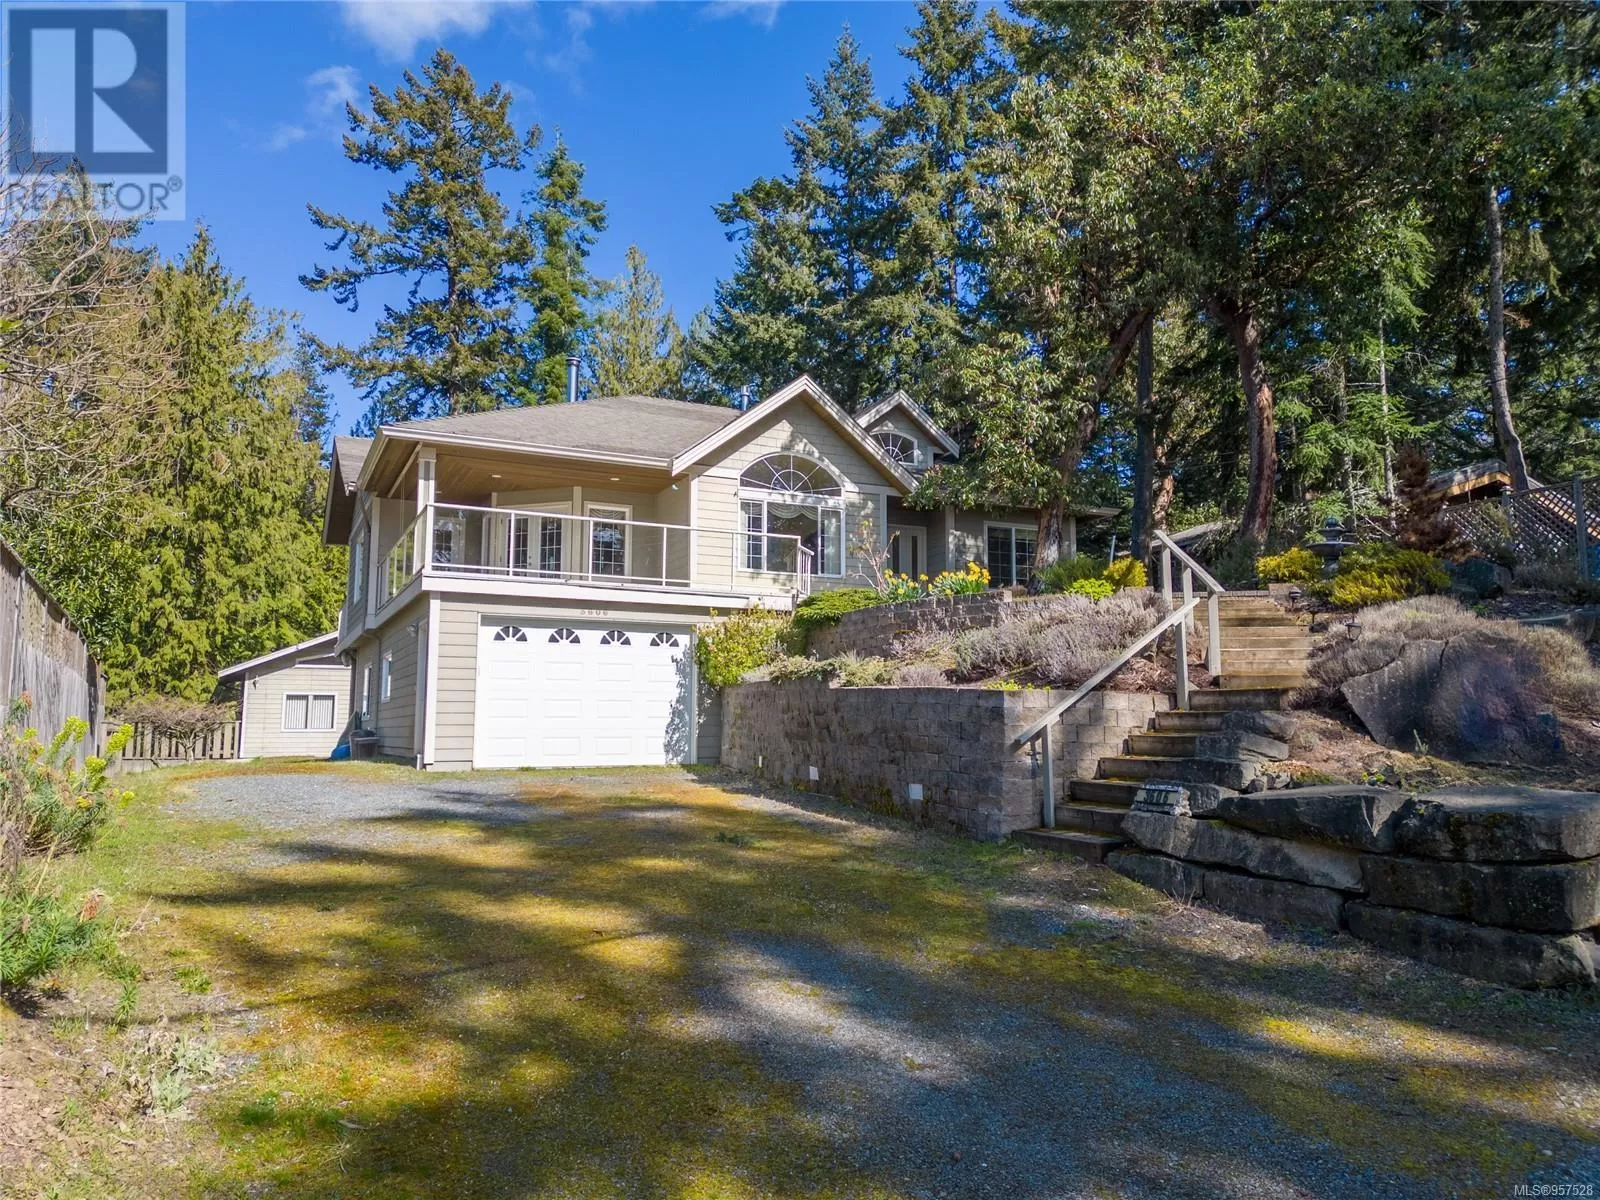 House for rent: 3606 Foc-sle Rd, Pender Island, British Columbia V0N 2M2